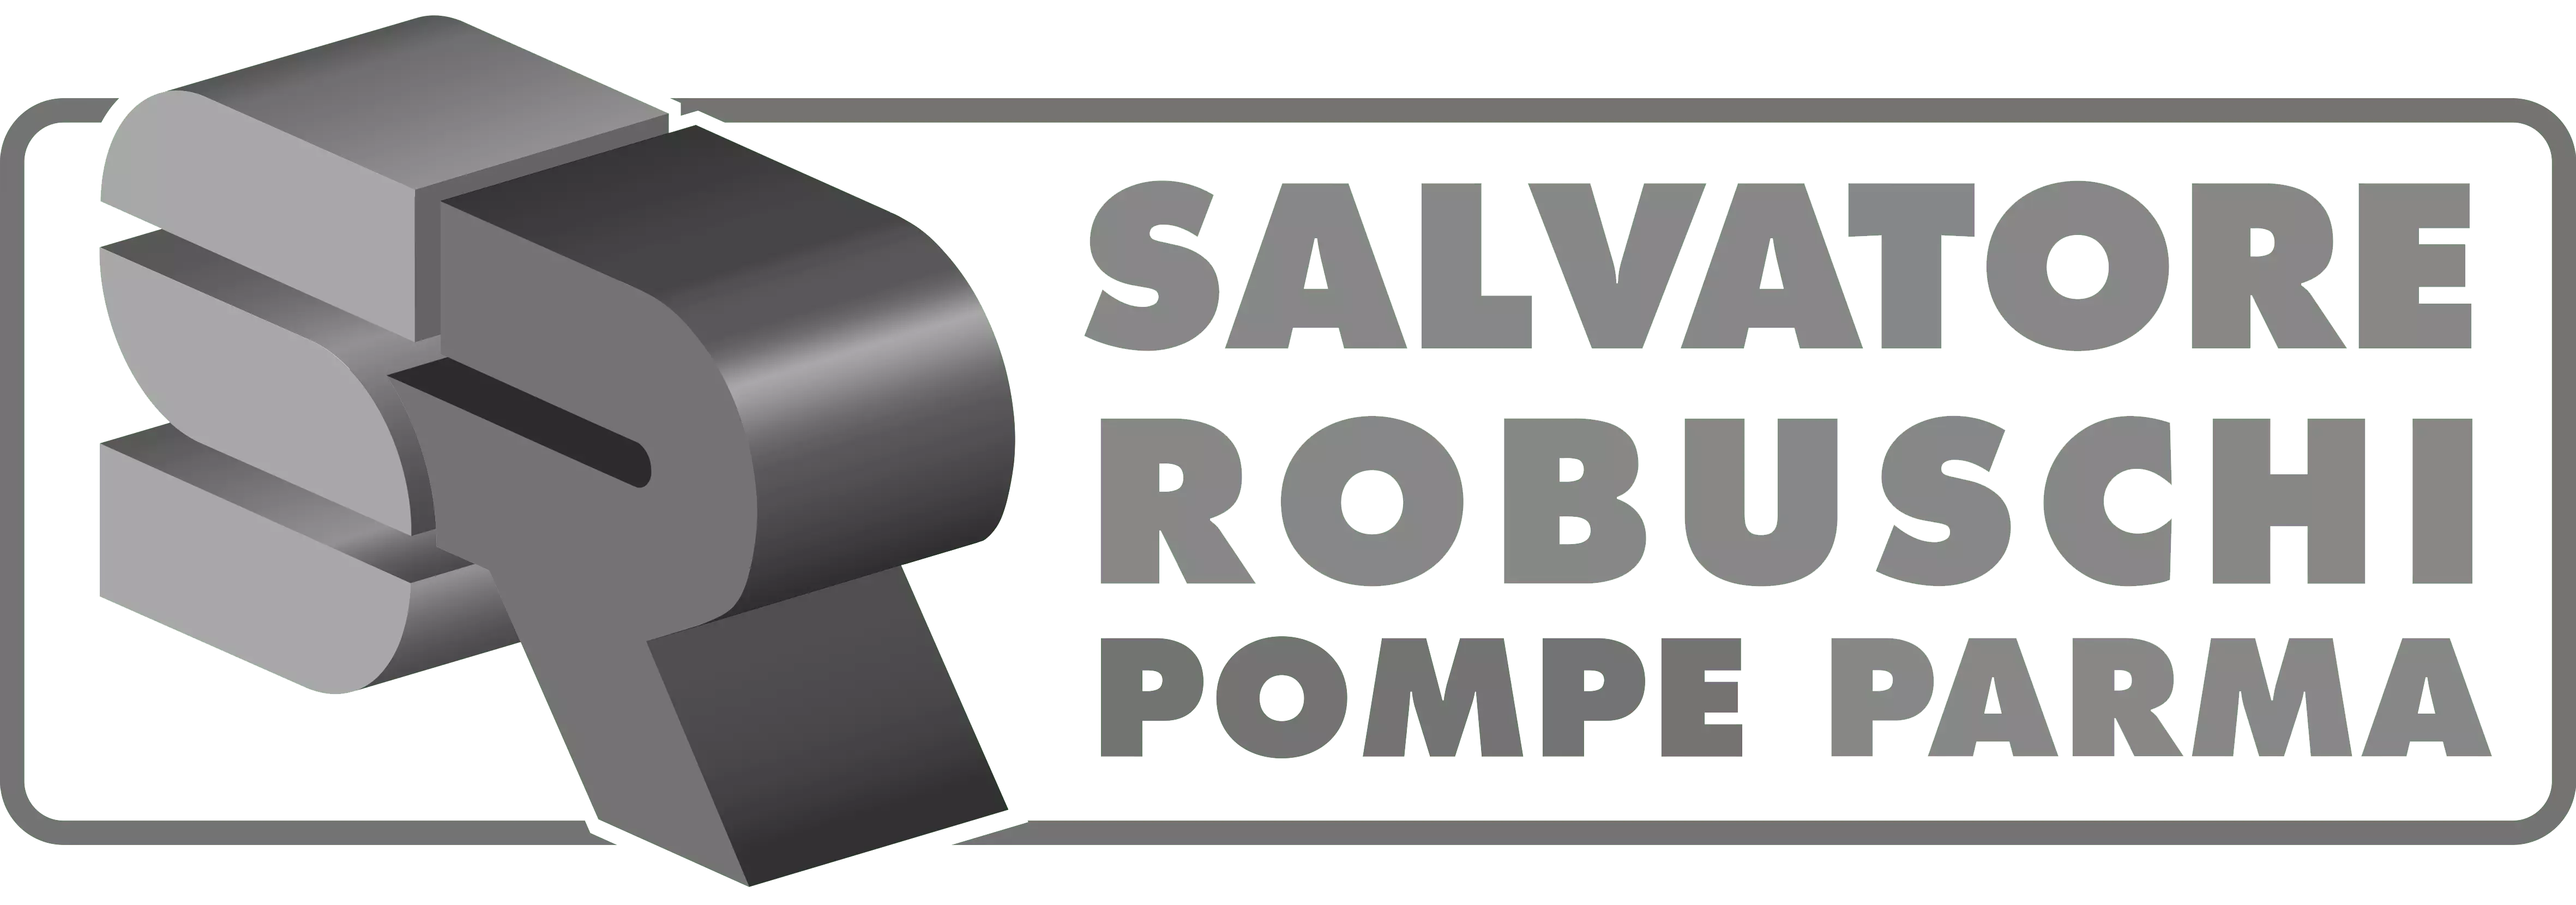 Salvatore_Robuschi